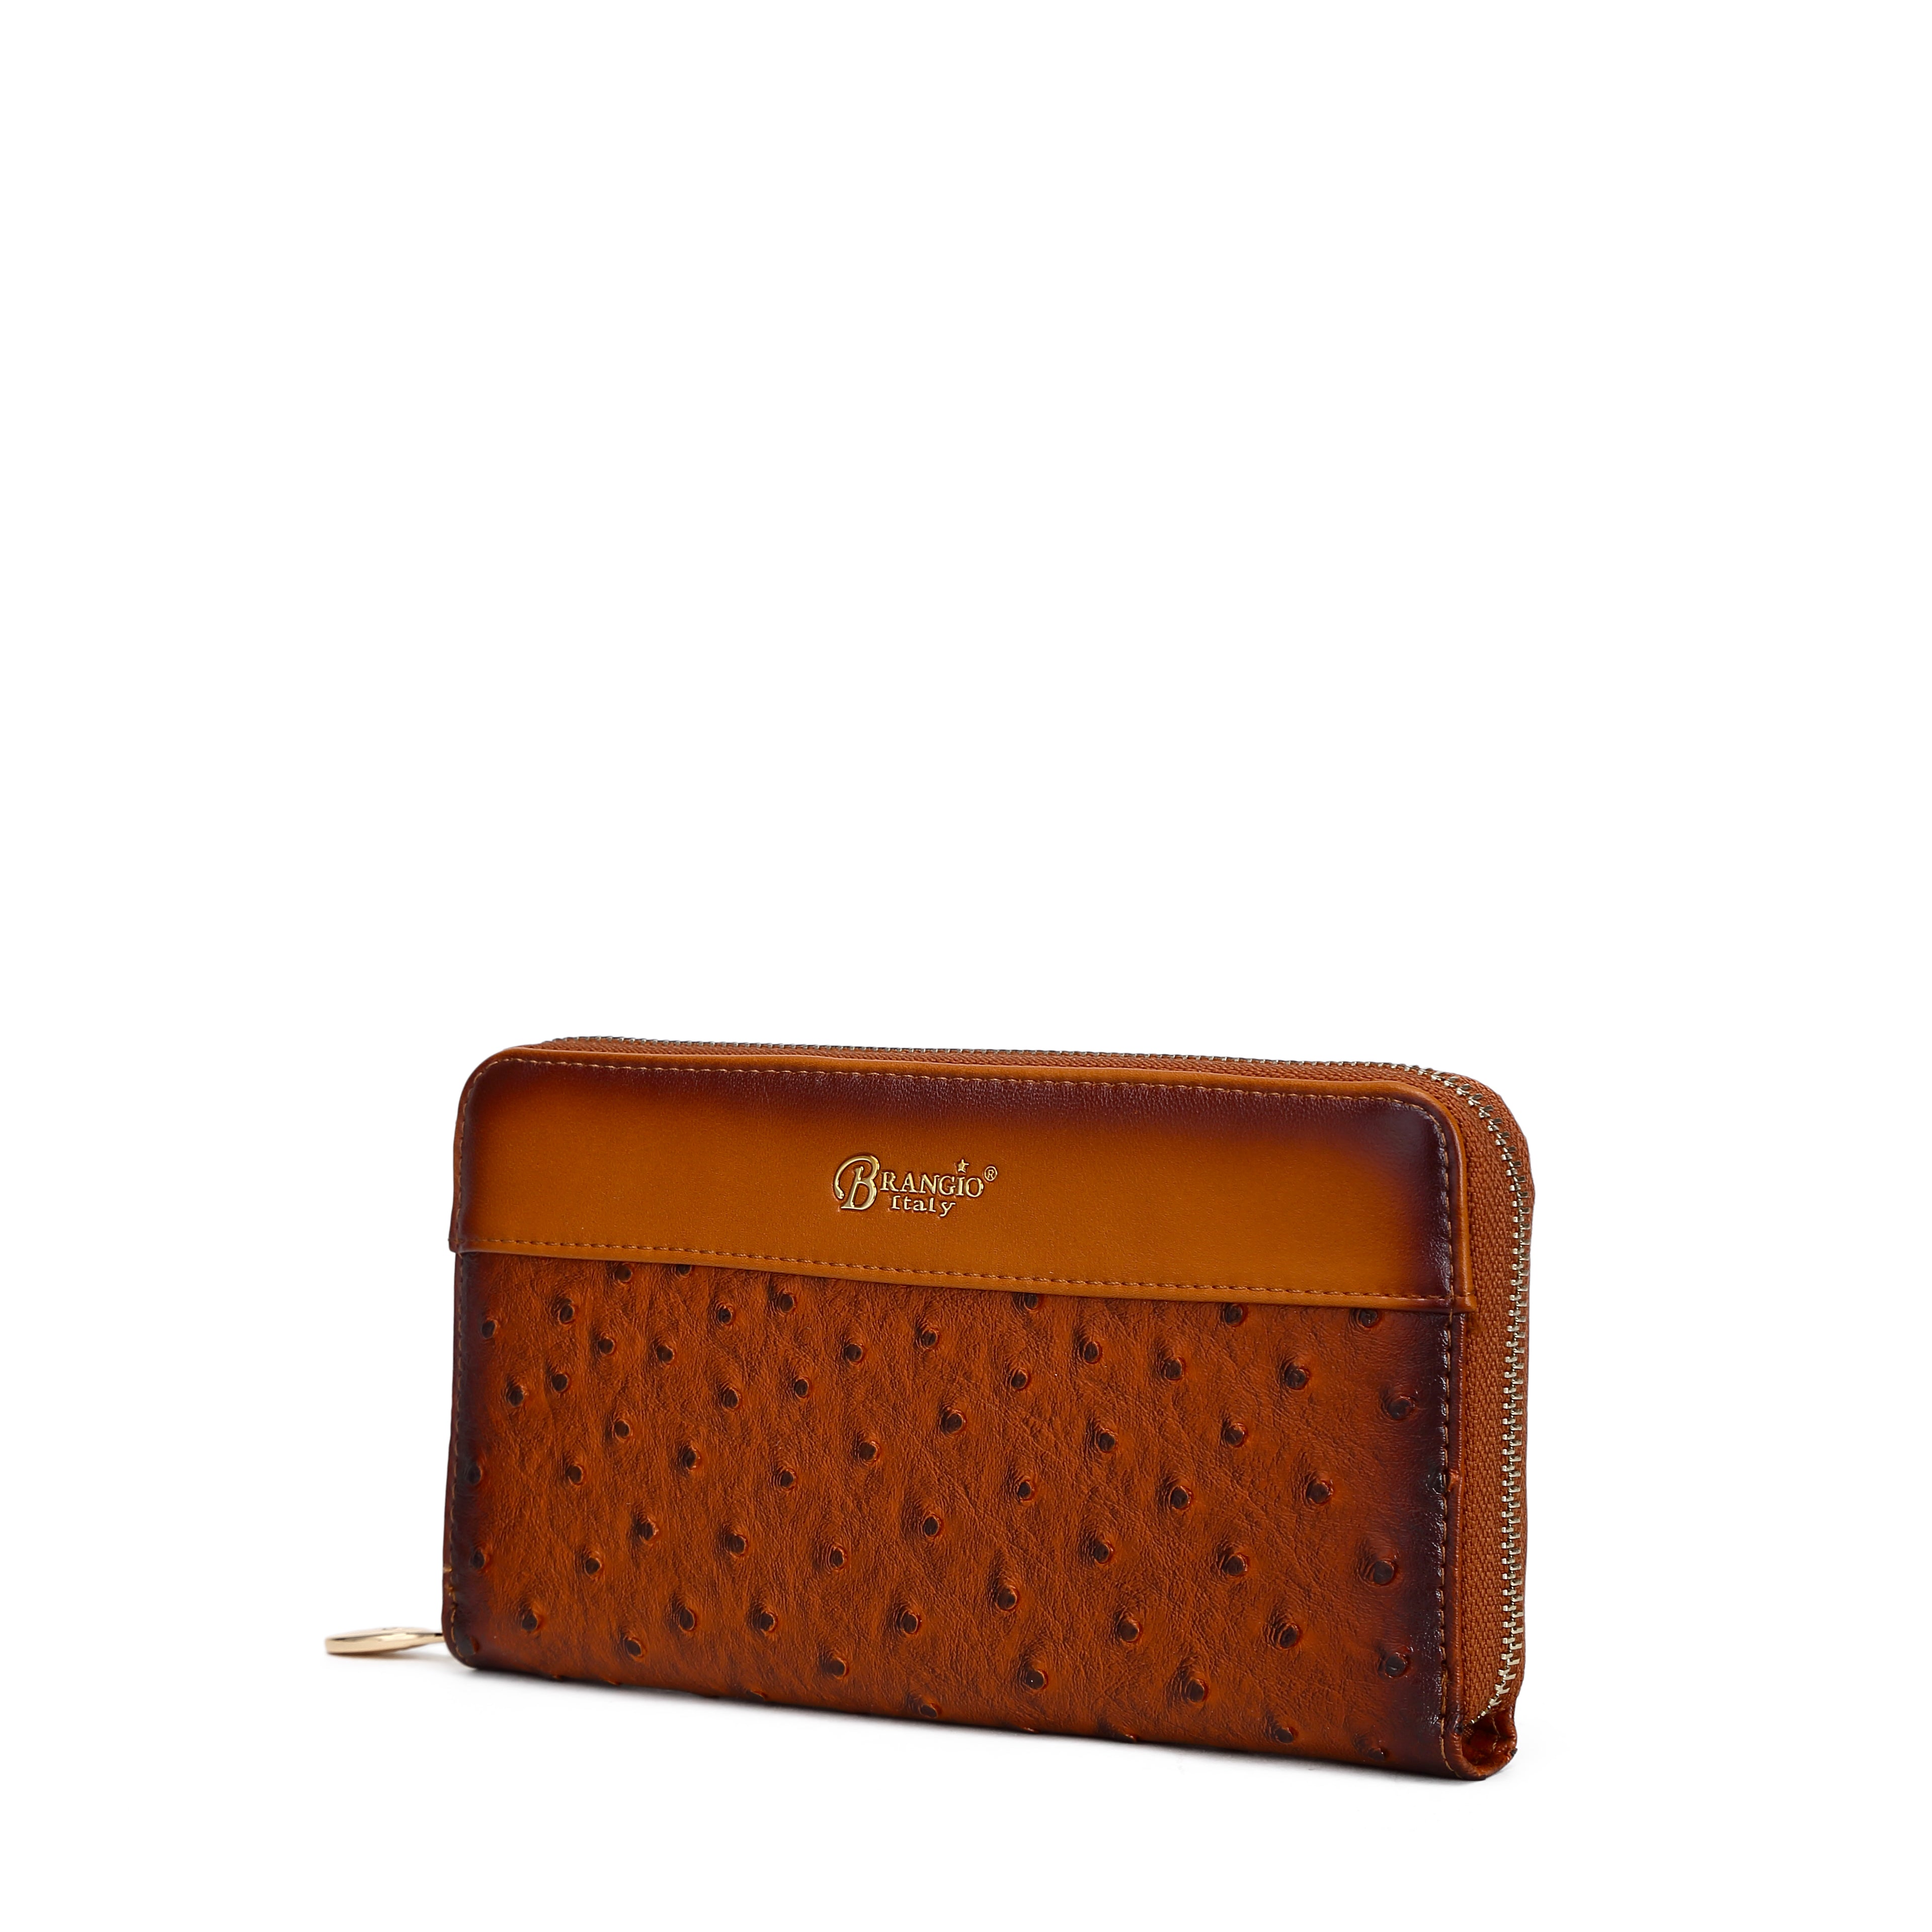 Crocodile Pattern Classy Wristlet Wallet for Work Travel Gift